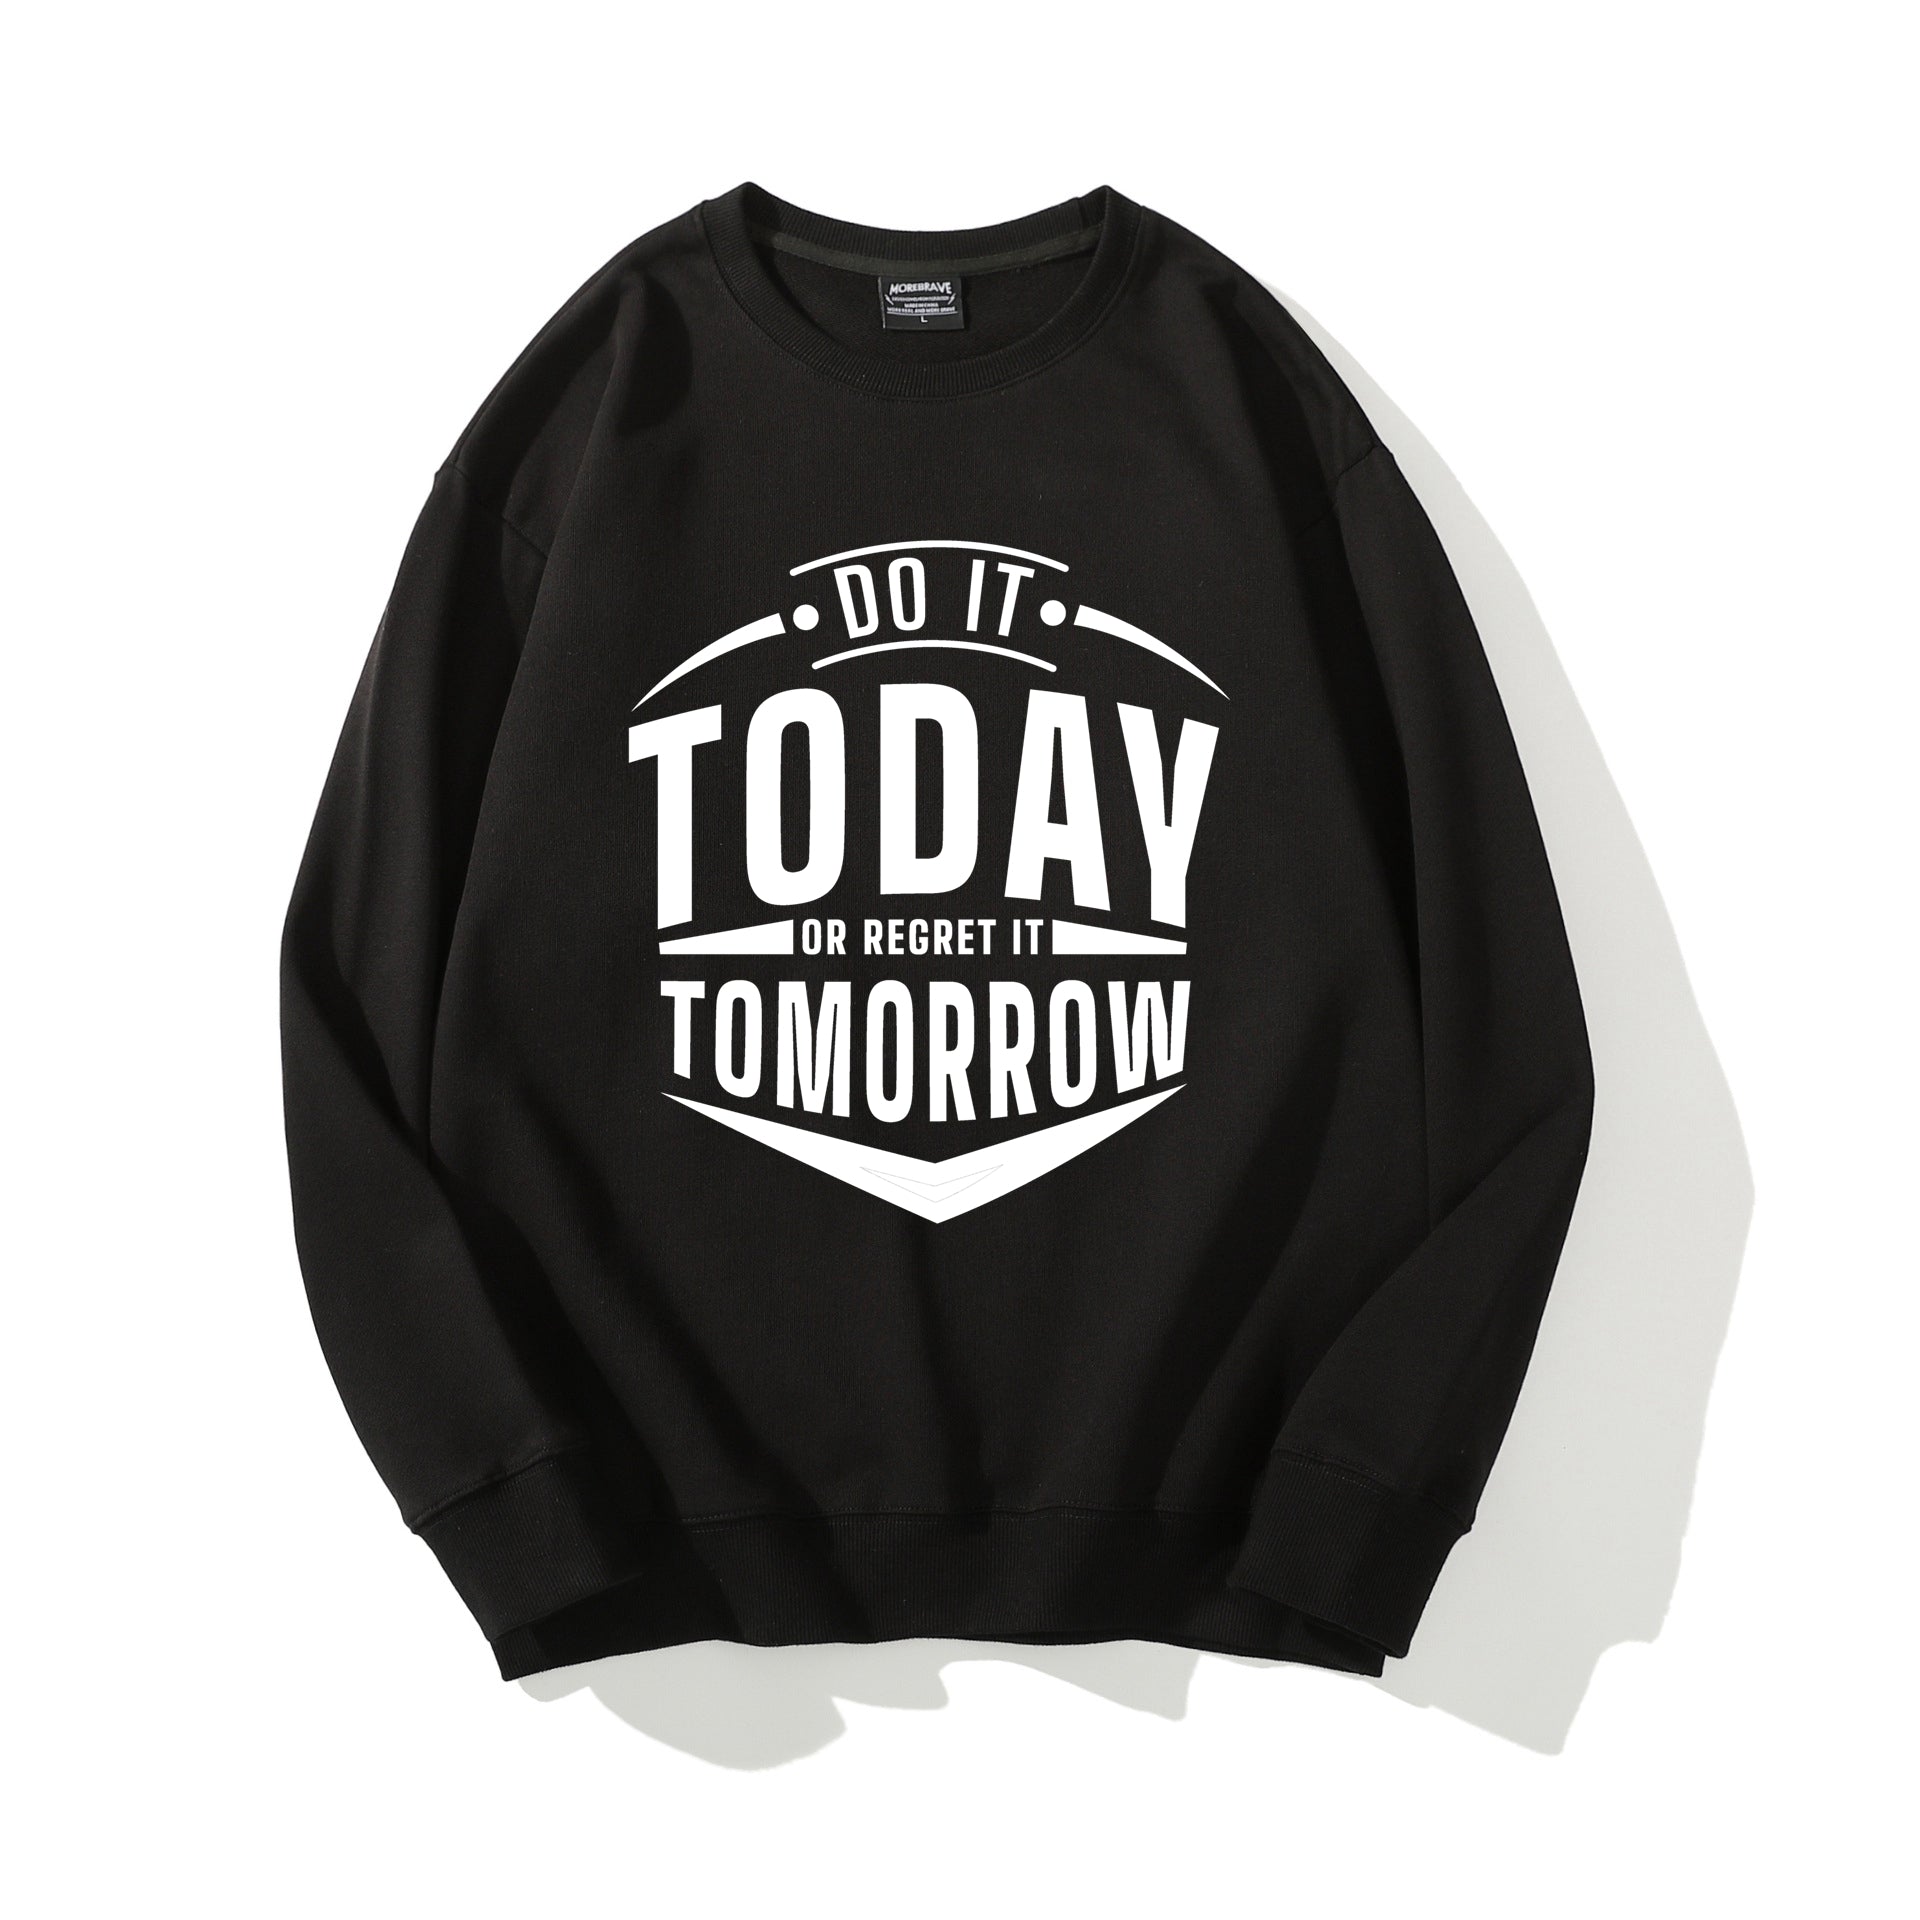 Do It Today Sweatshirt Slogan Print Crewneck Cotton Tops